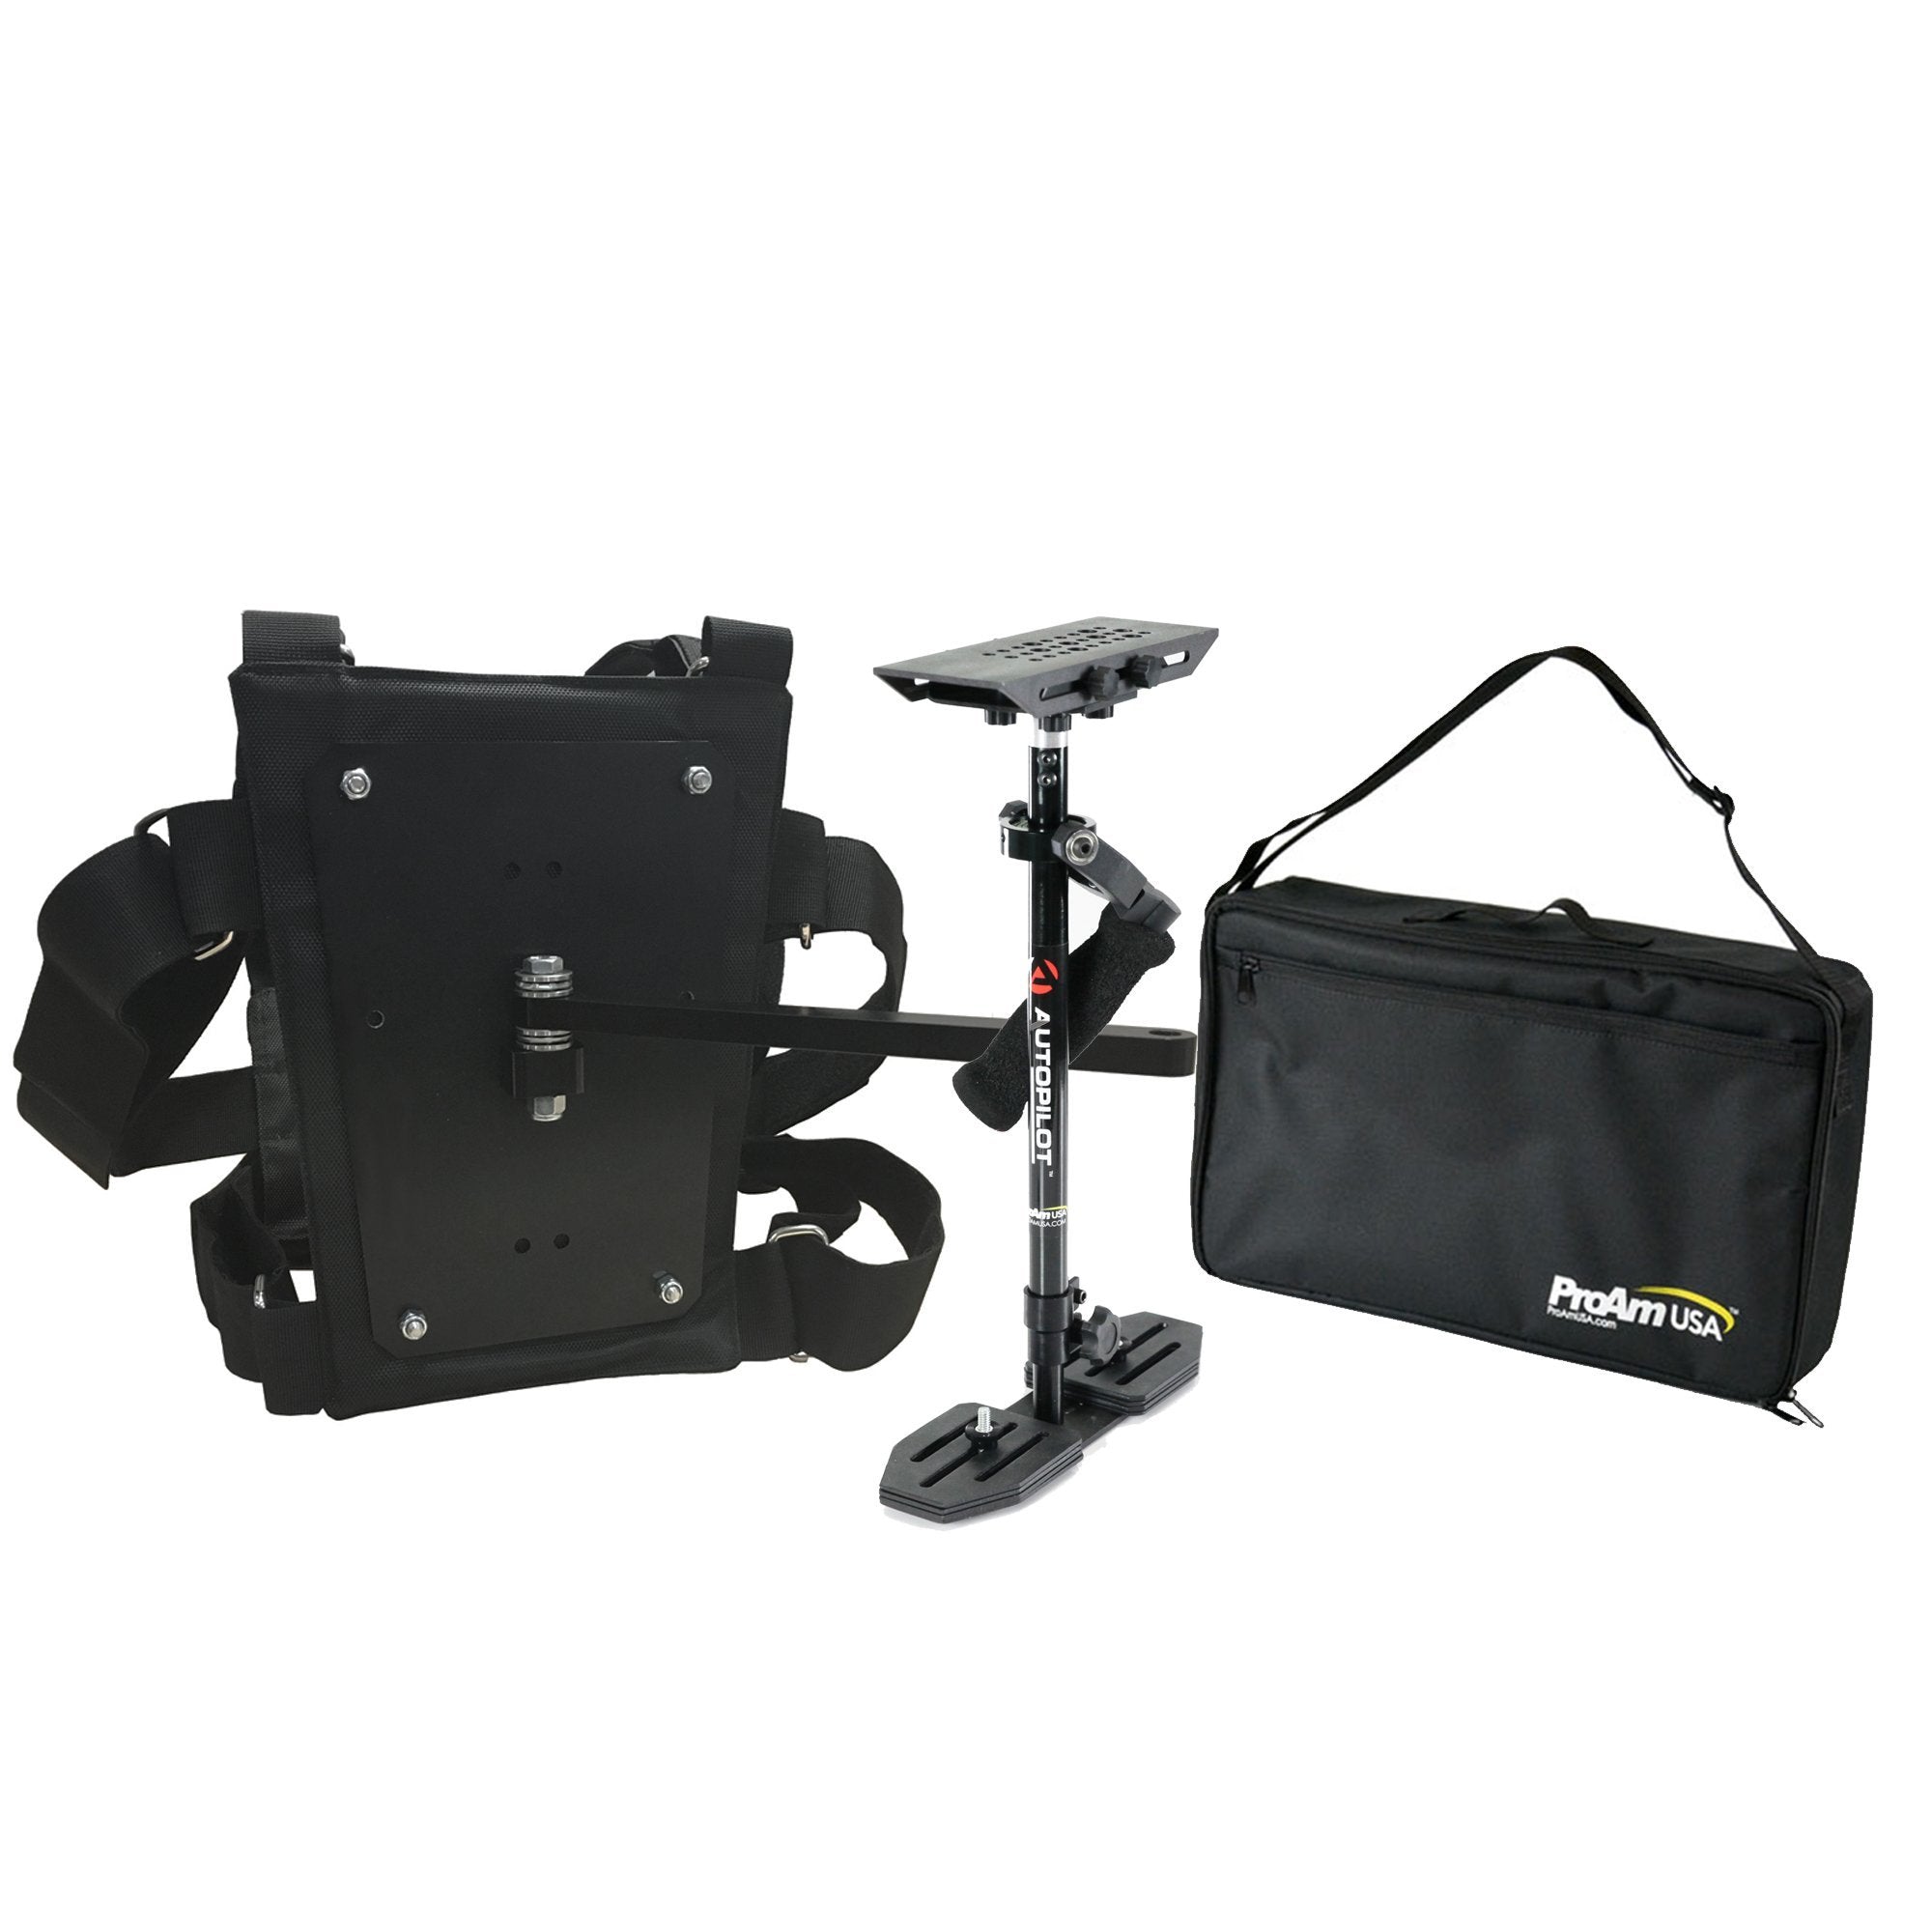 Autopilot Stabilizer, Carrying Bag and Vest Kit - PRODUCTS